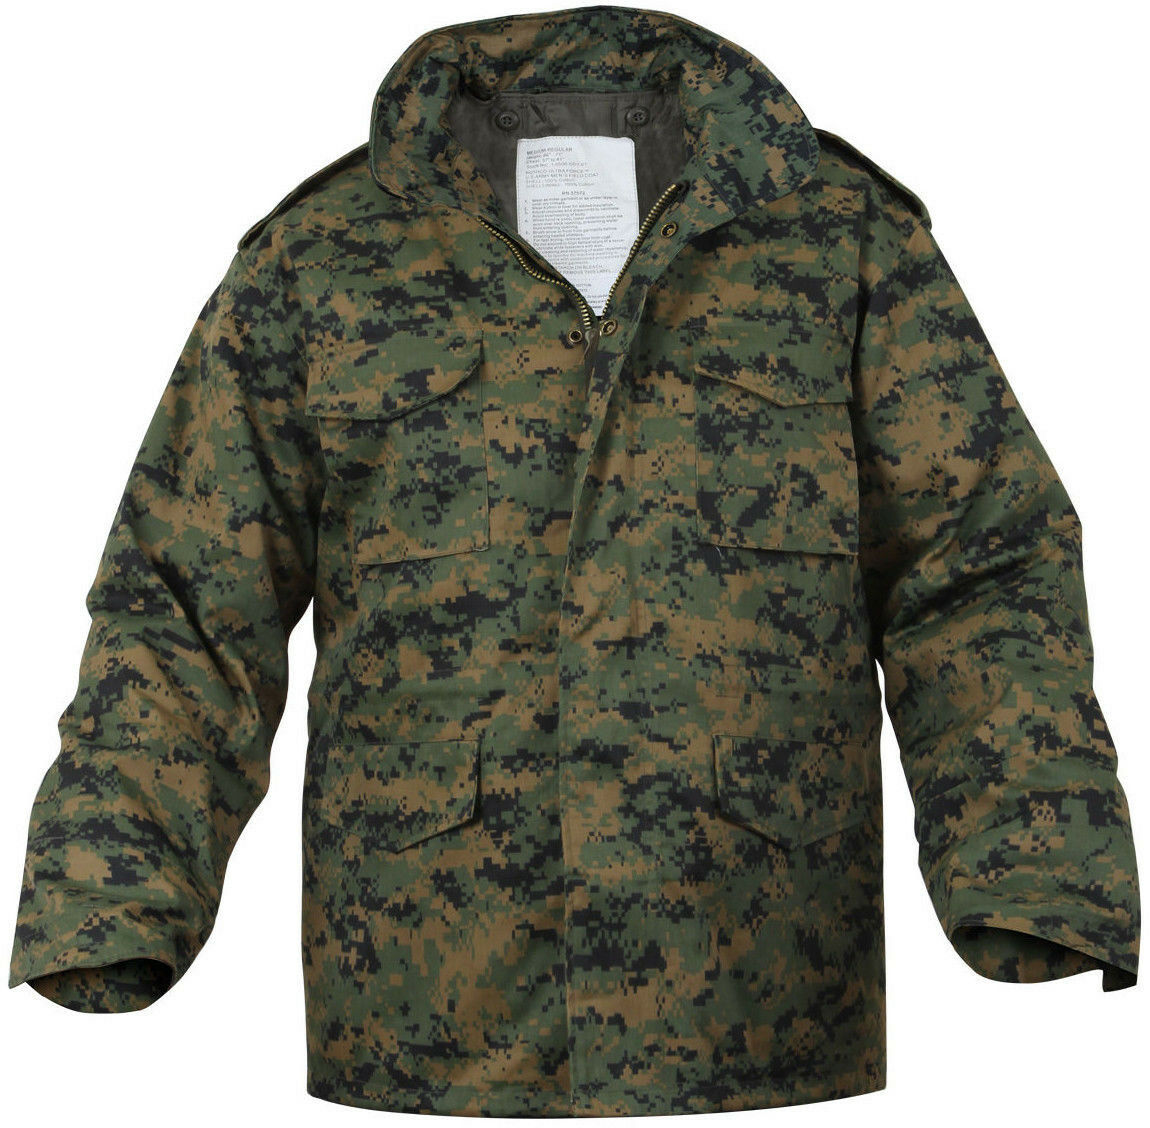 Woodland Digital Camouflage MARPAT M-65 Field Coat Army M65 Jacket w/ Liner